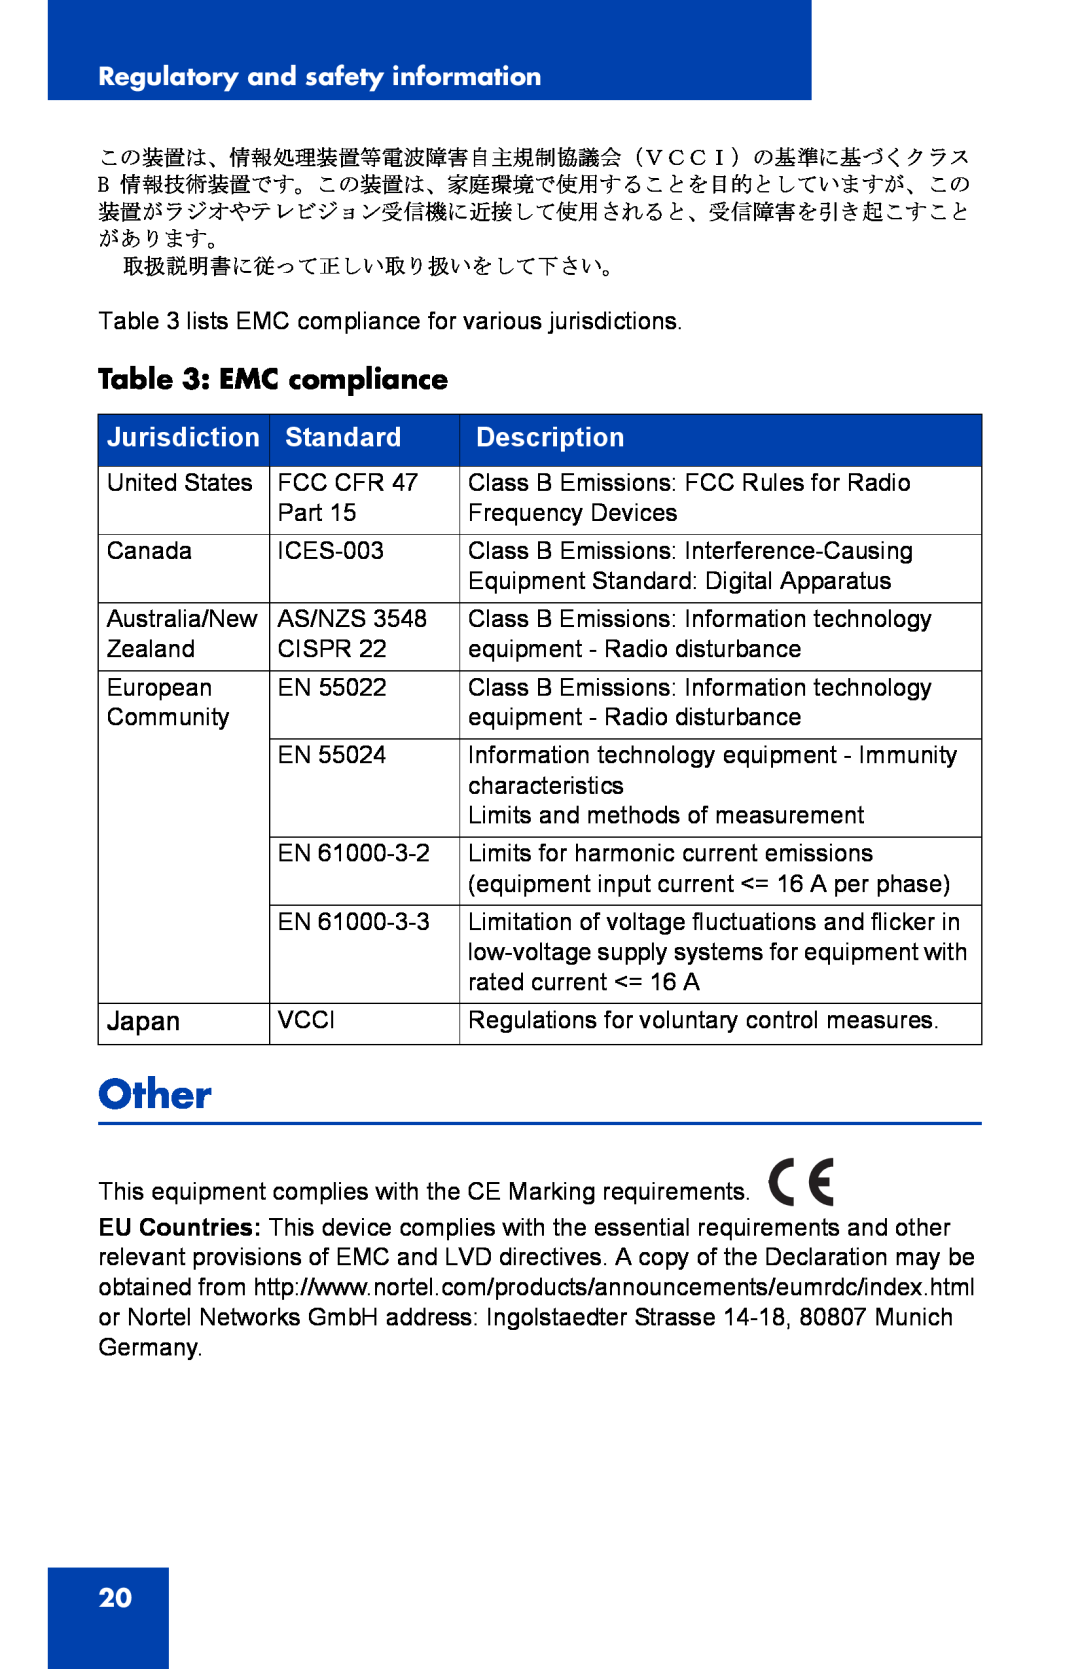 Nortel Networks 1100 manual Other, EMC compliance, Jurisdiction, Standard, Description, Regulatory and safety information 